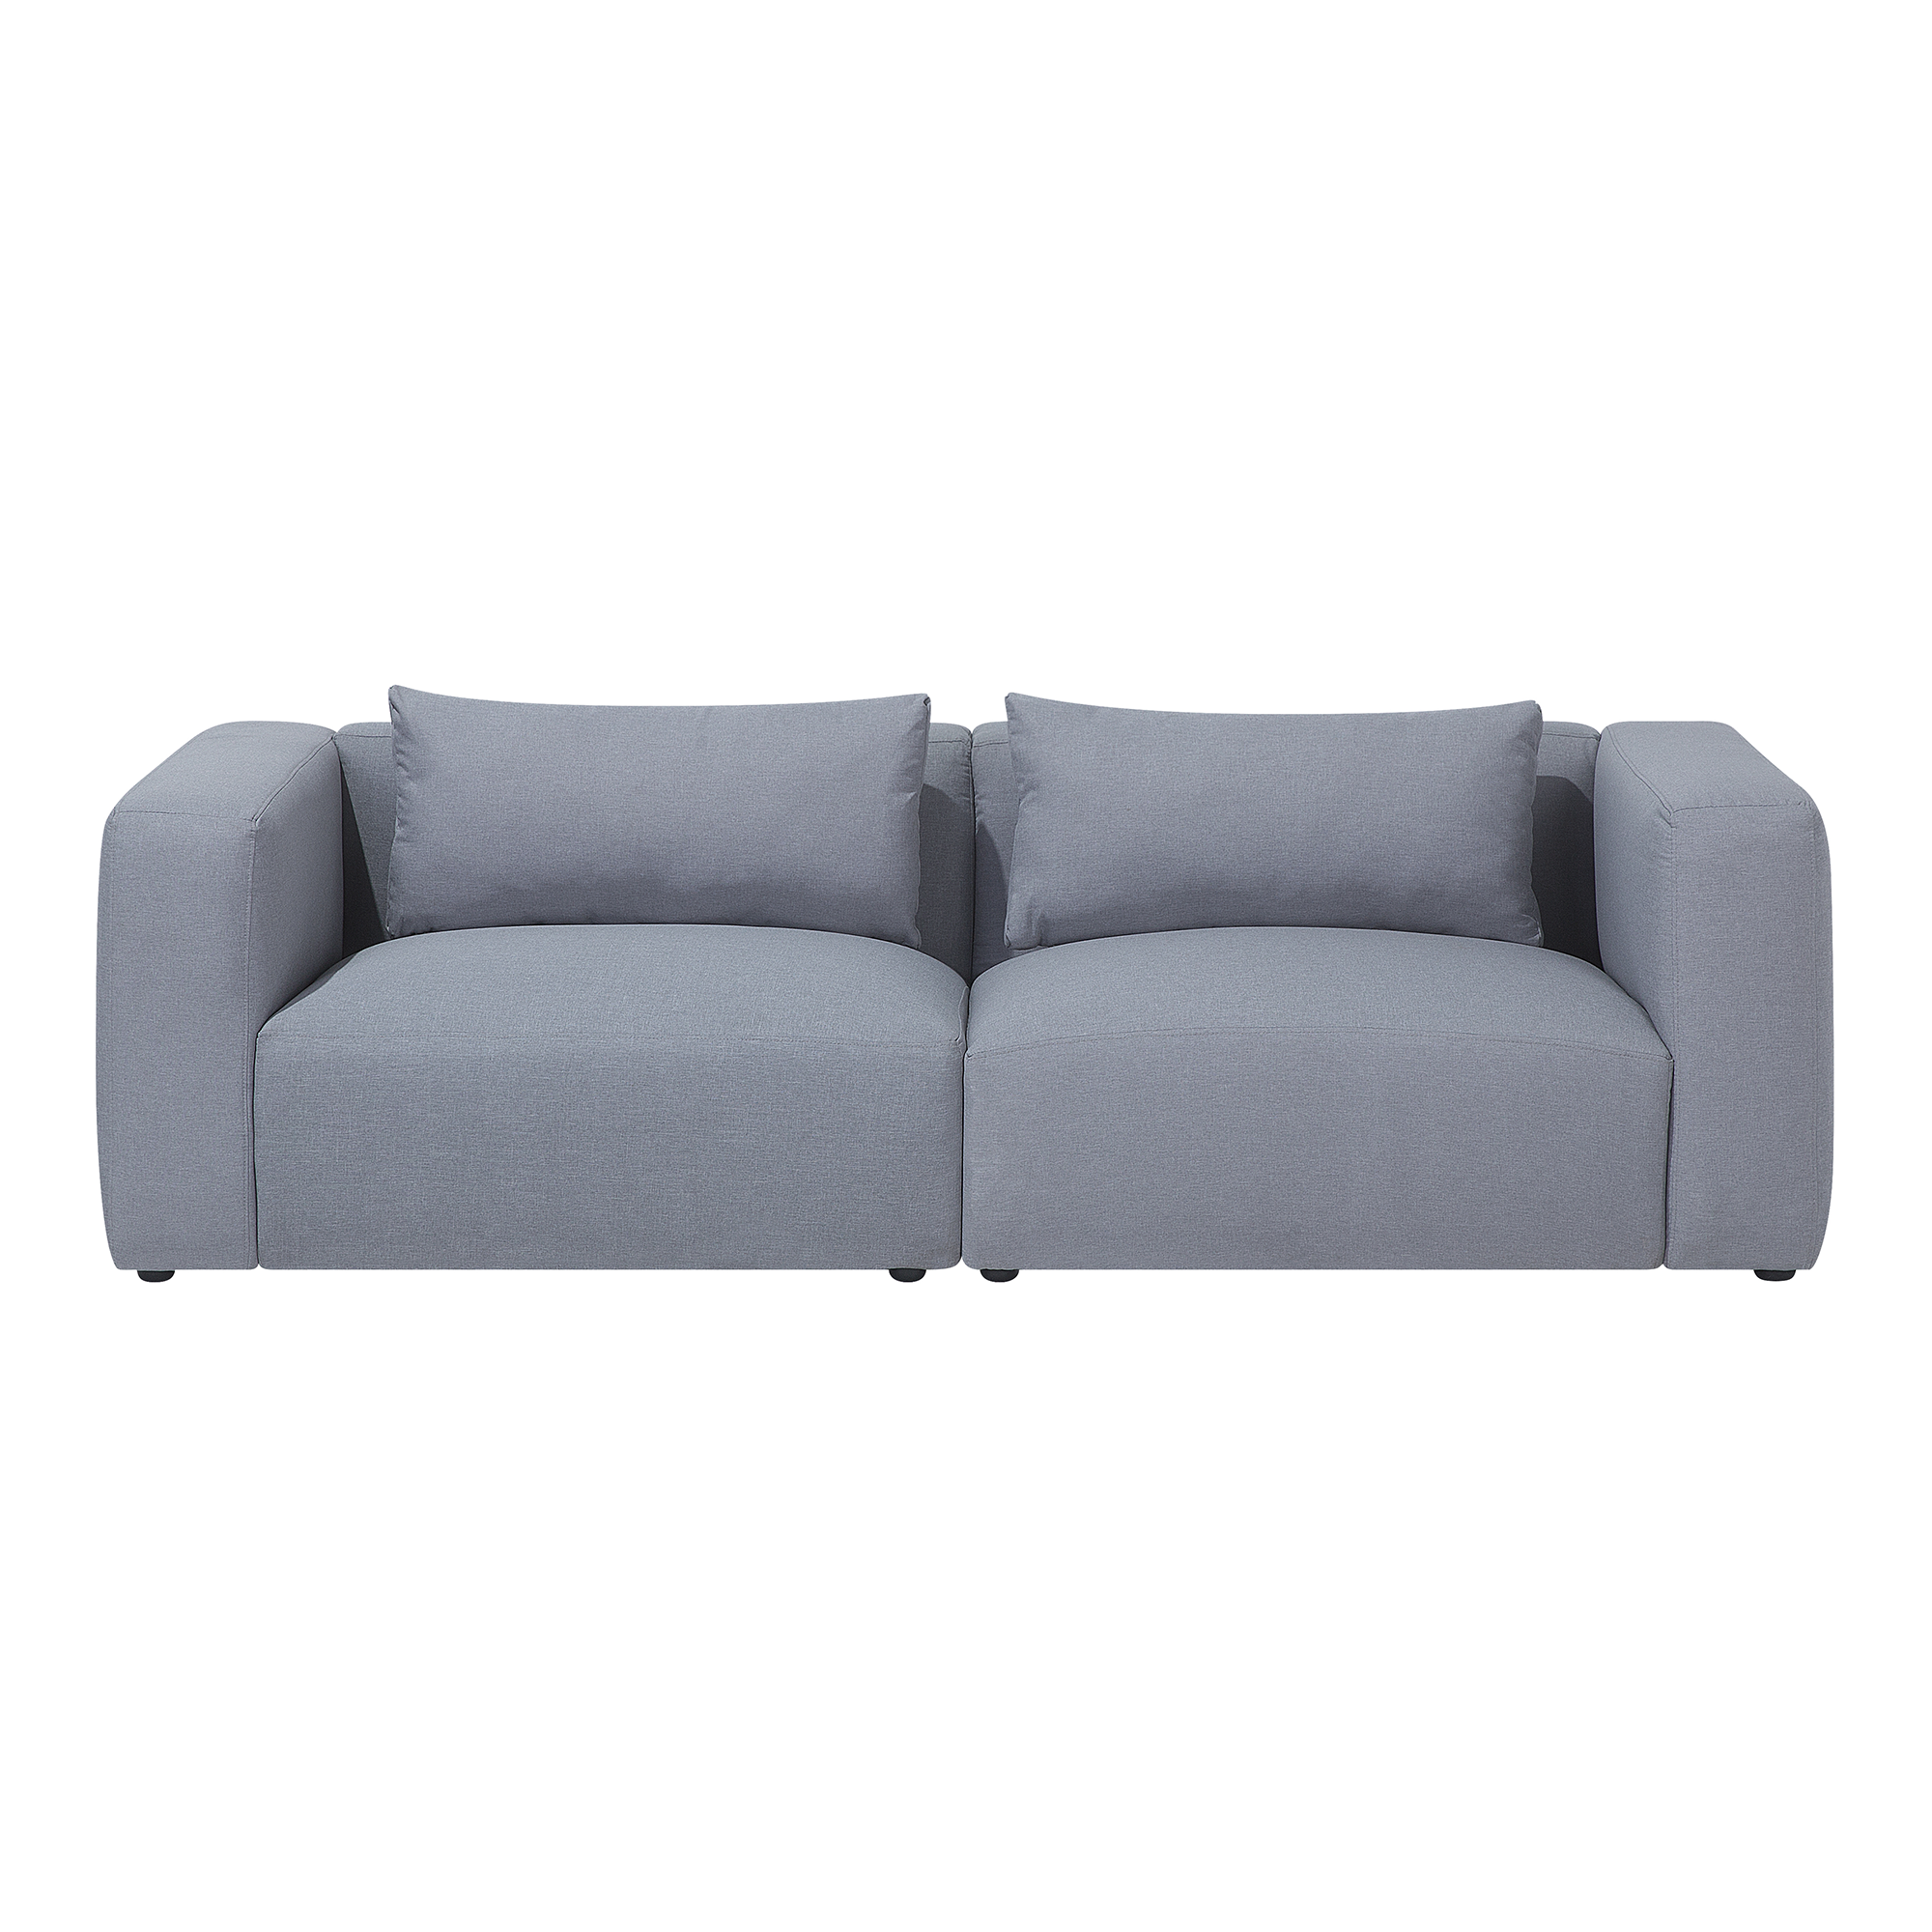 Beliani 3 Seater Sofa Light Grey Fabric Upholstered Modern Living Room